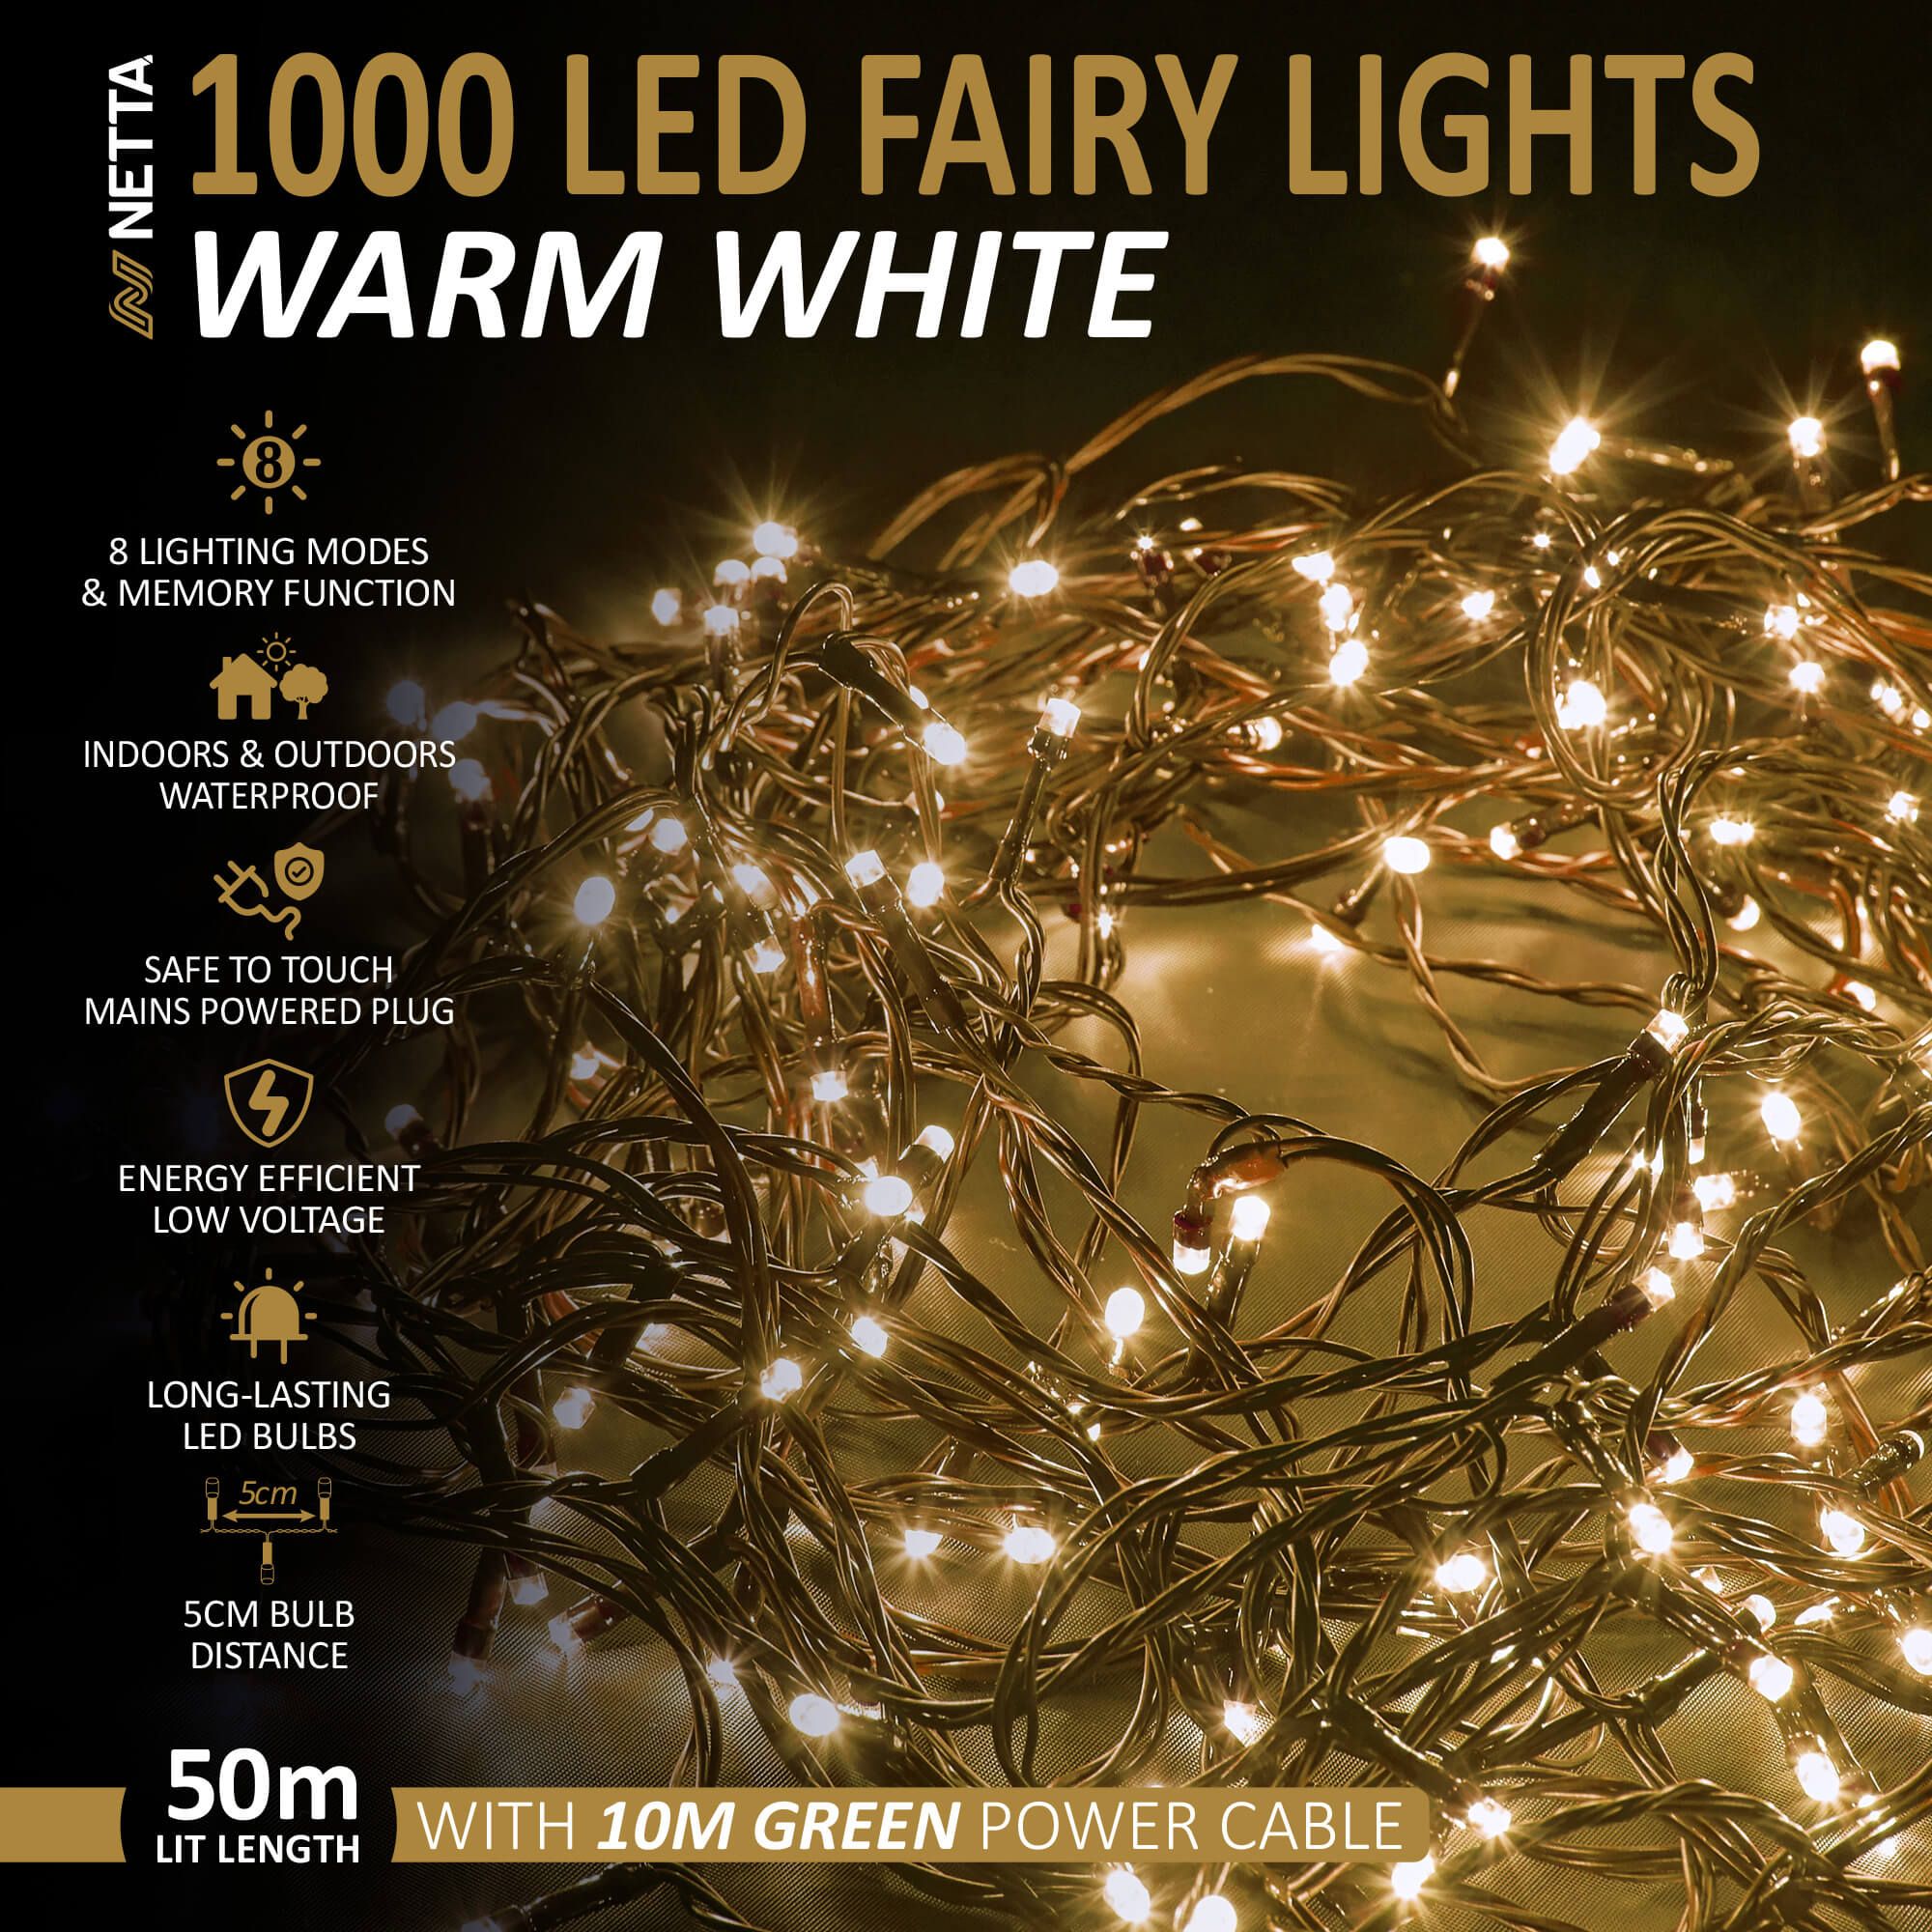 NETTA 1000 LED Fairy Lights 50M Christmas Tree Lights Green Cable - Warm White